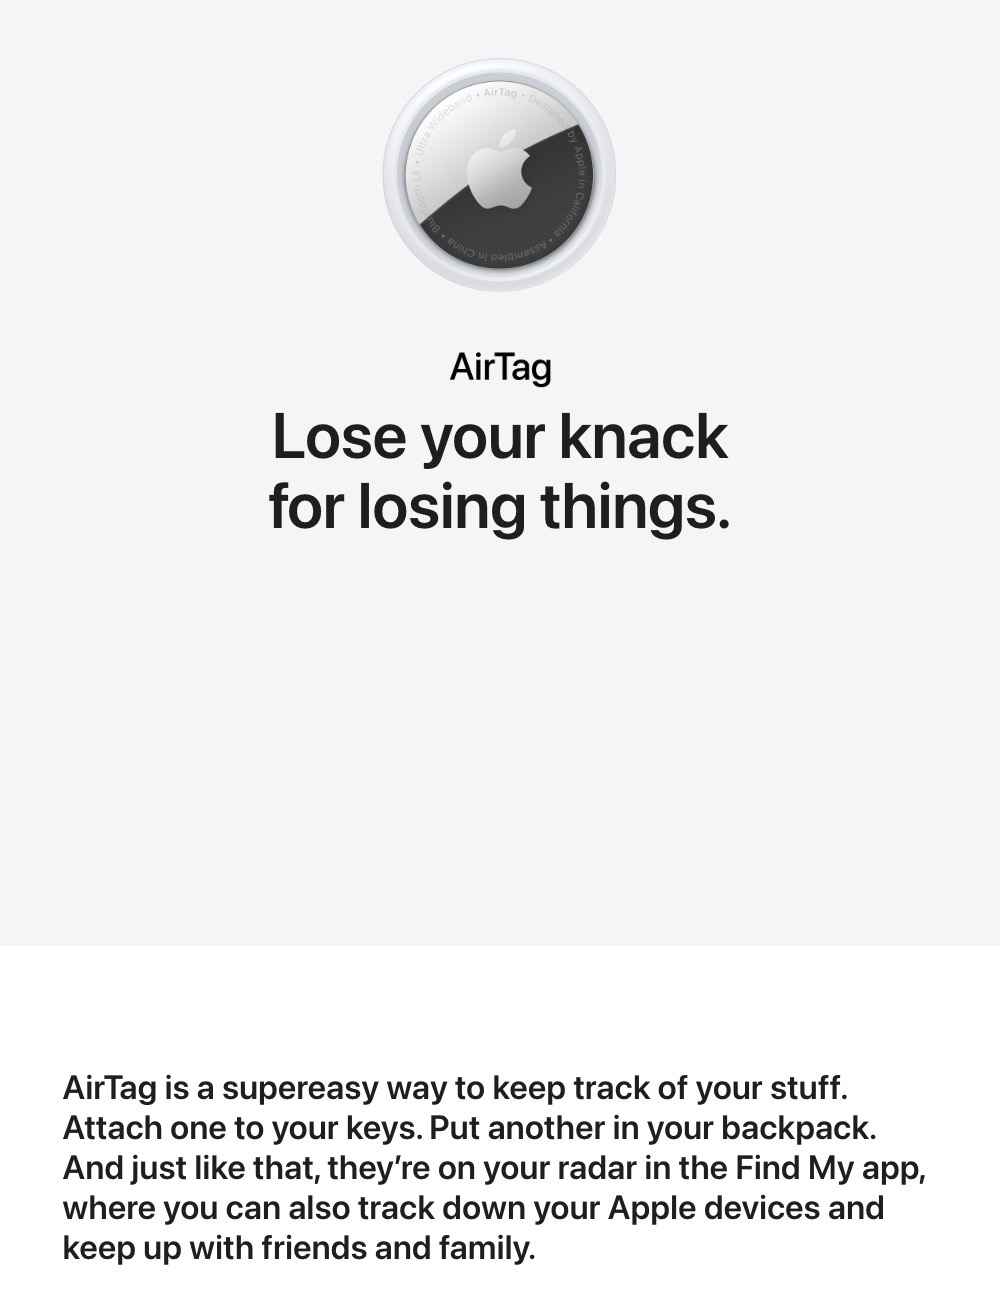 Apple-AirTag-Product-Description-1